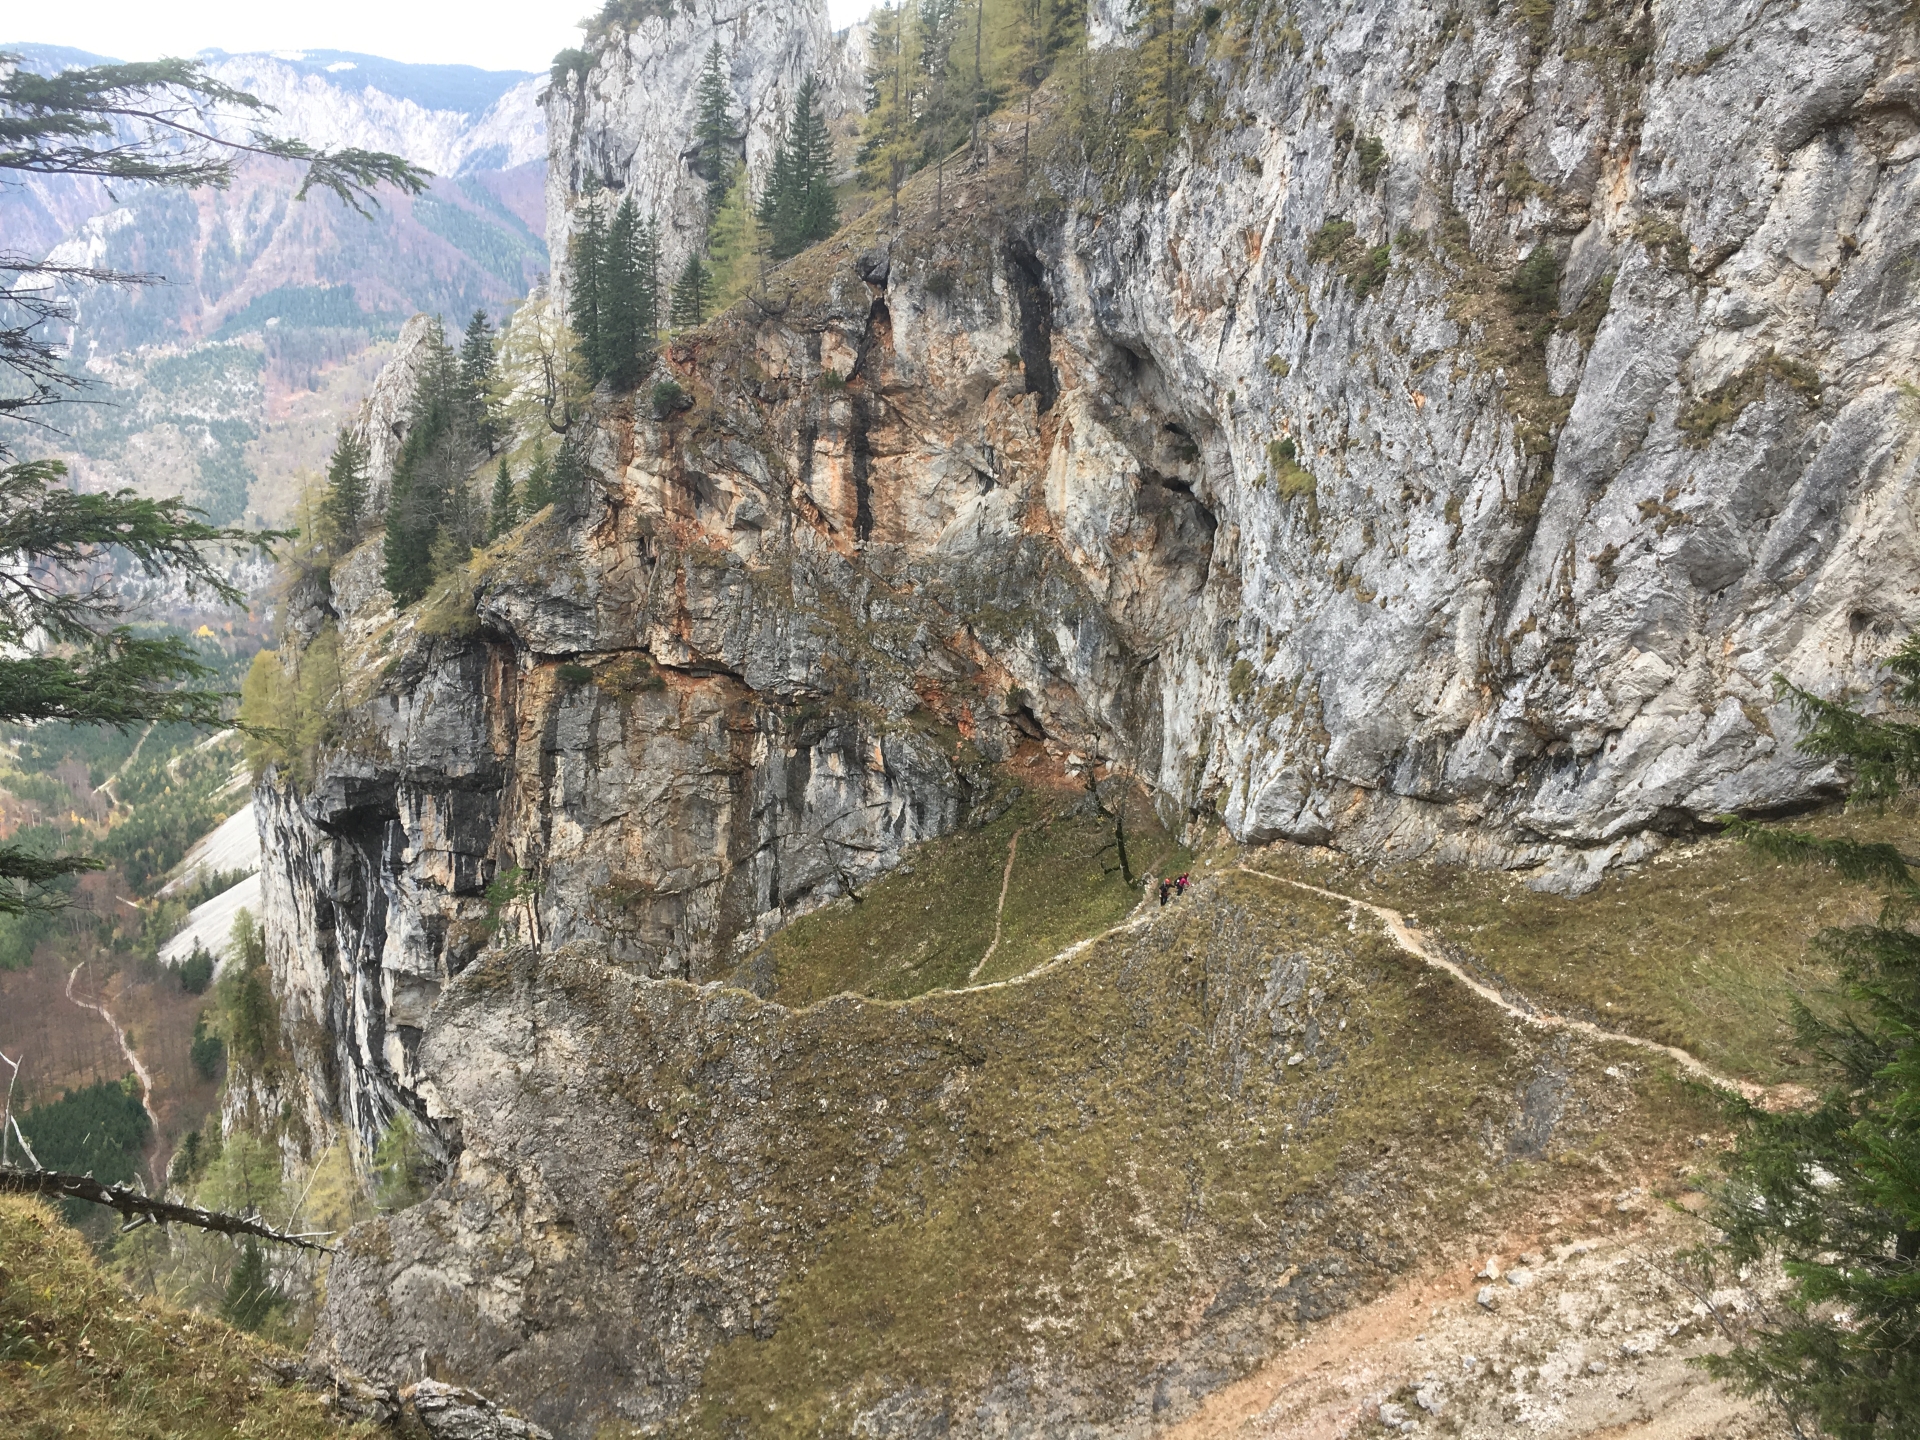 The Alpenvereinssteig (hiking part)